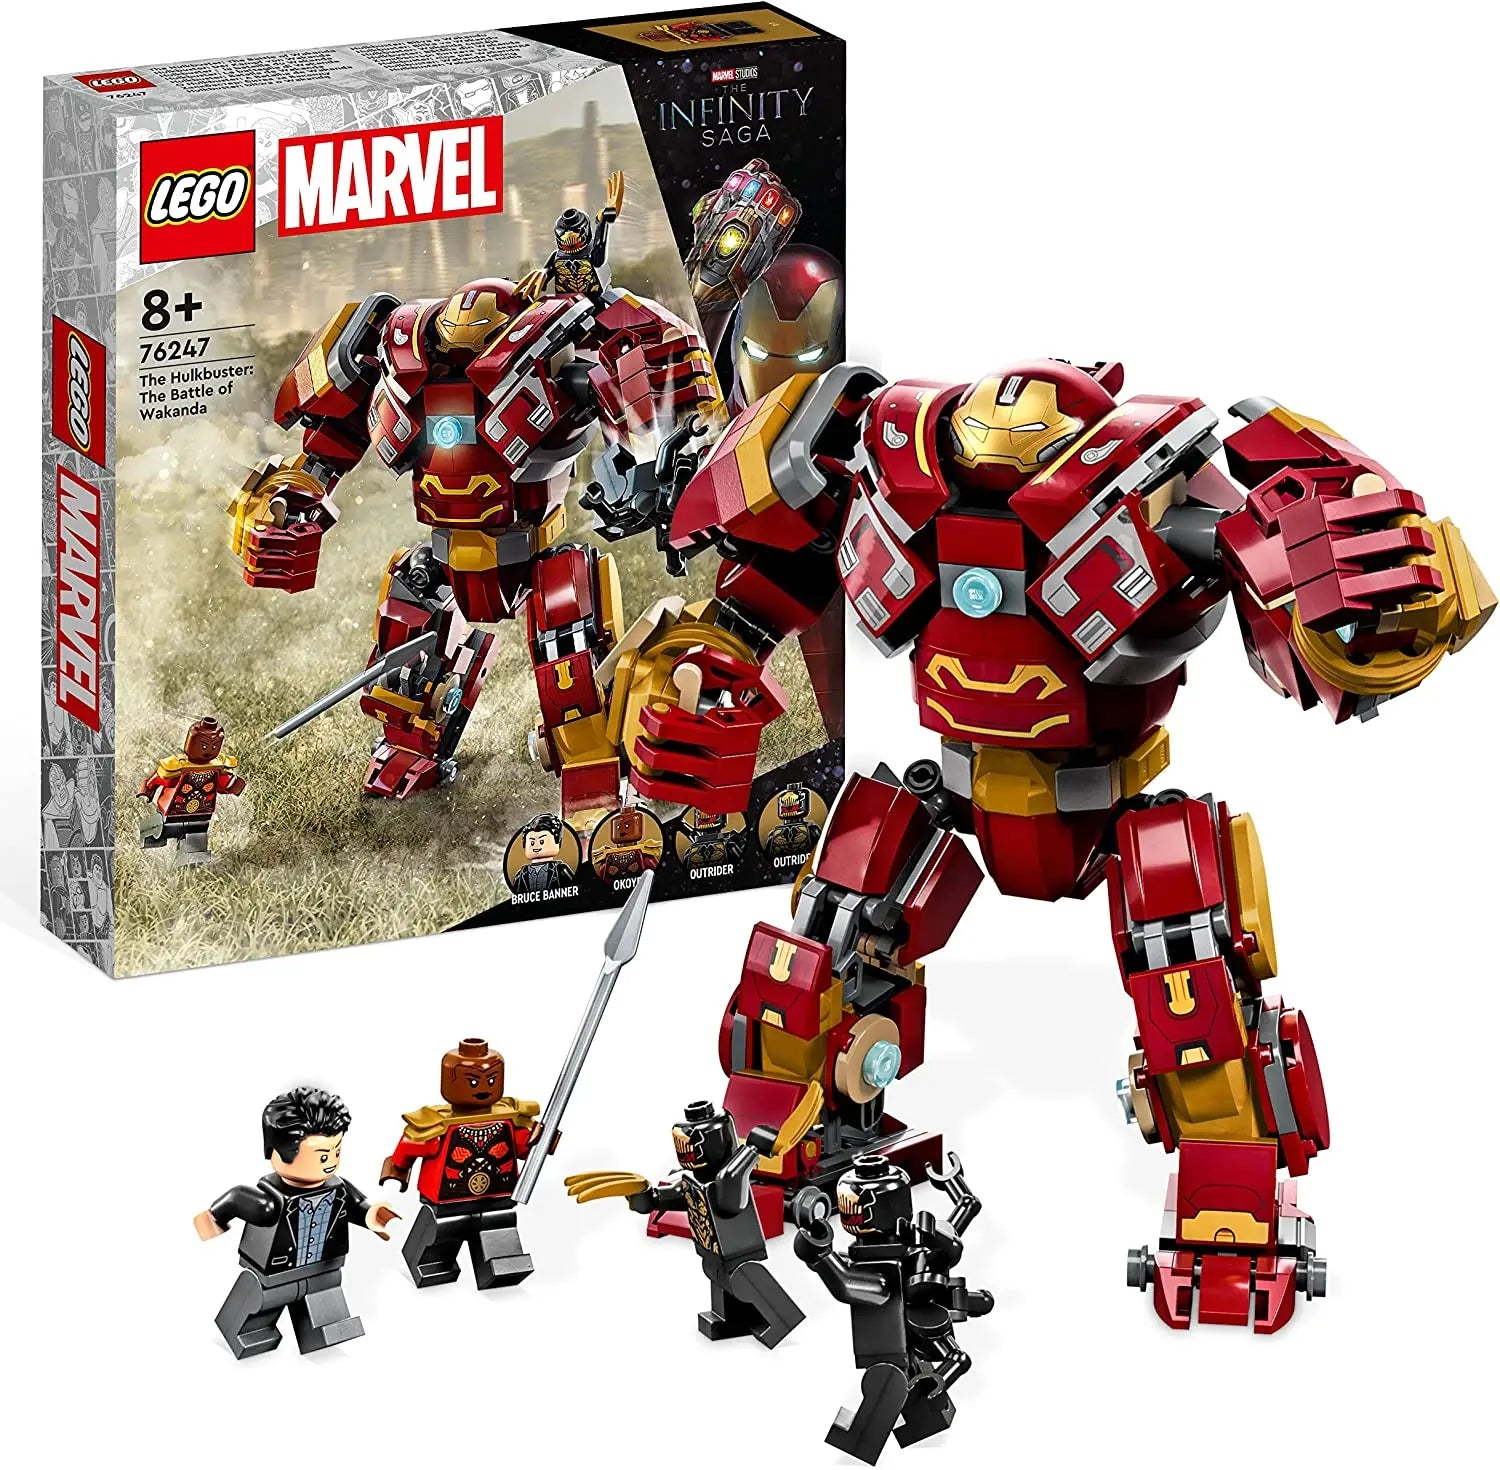 LEGO Marvel 76247 Hulkbuster : La Bataille du Wakanda Figurine, Jouet Filles et Garçons avec Minifigurine Hulk Bruce lego